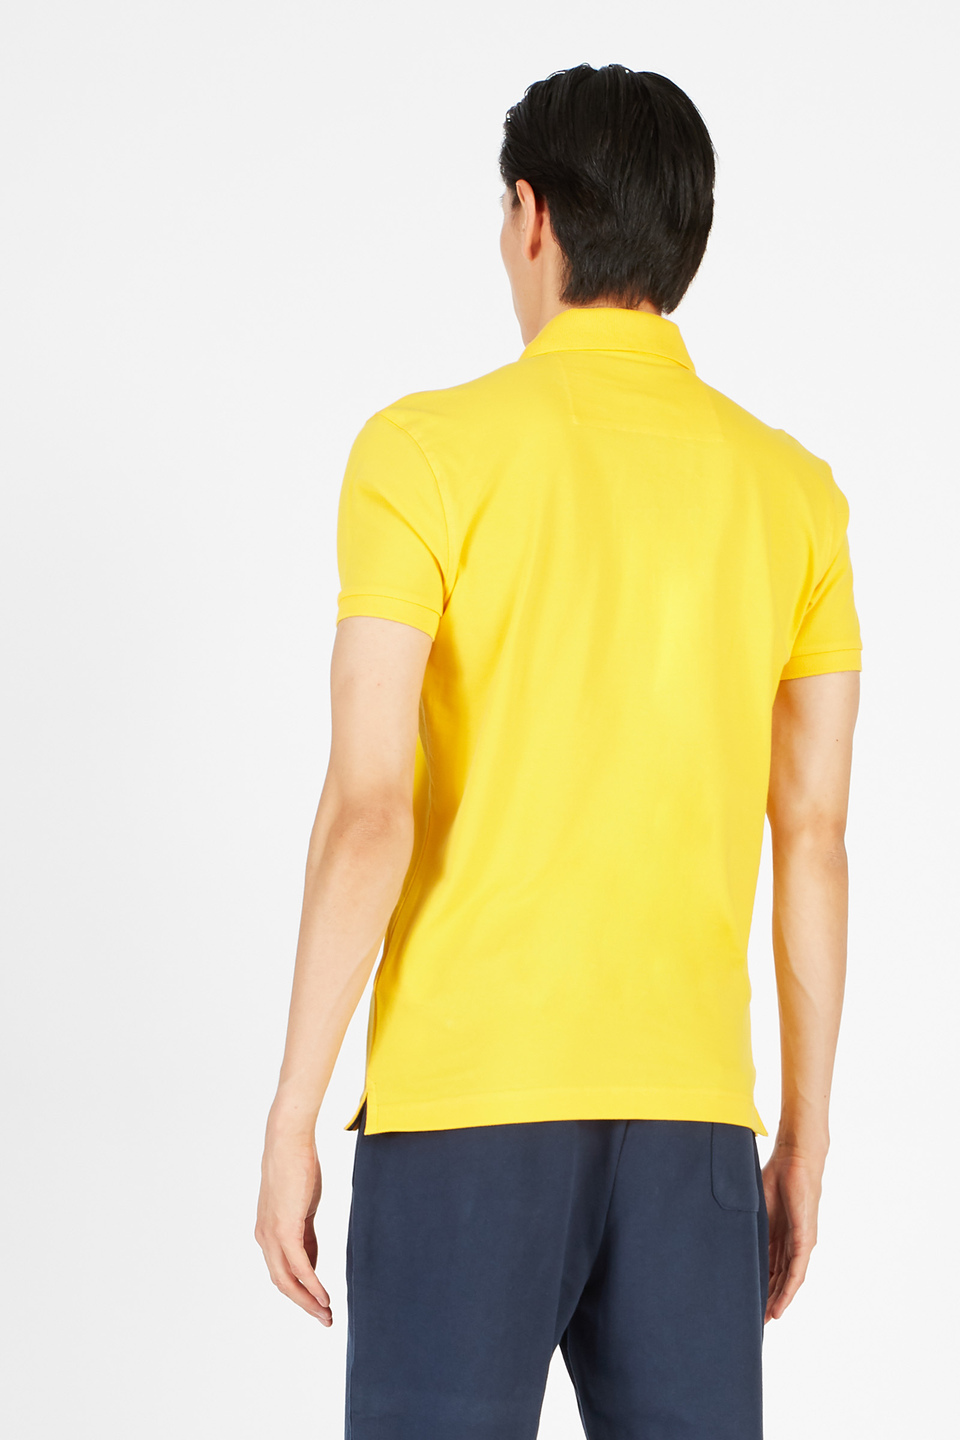 Herren-Poloshirt slim fit | La Martina - Official Online Shop